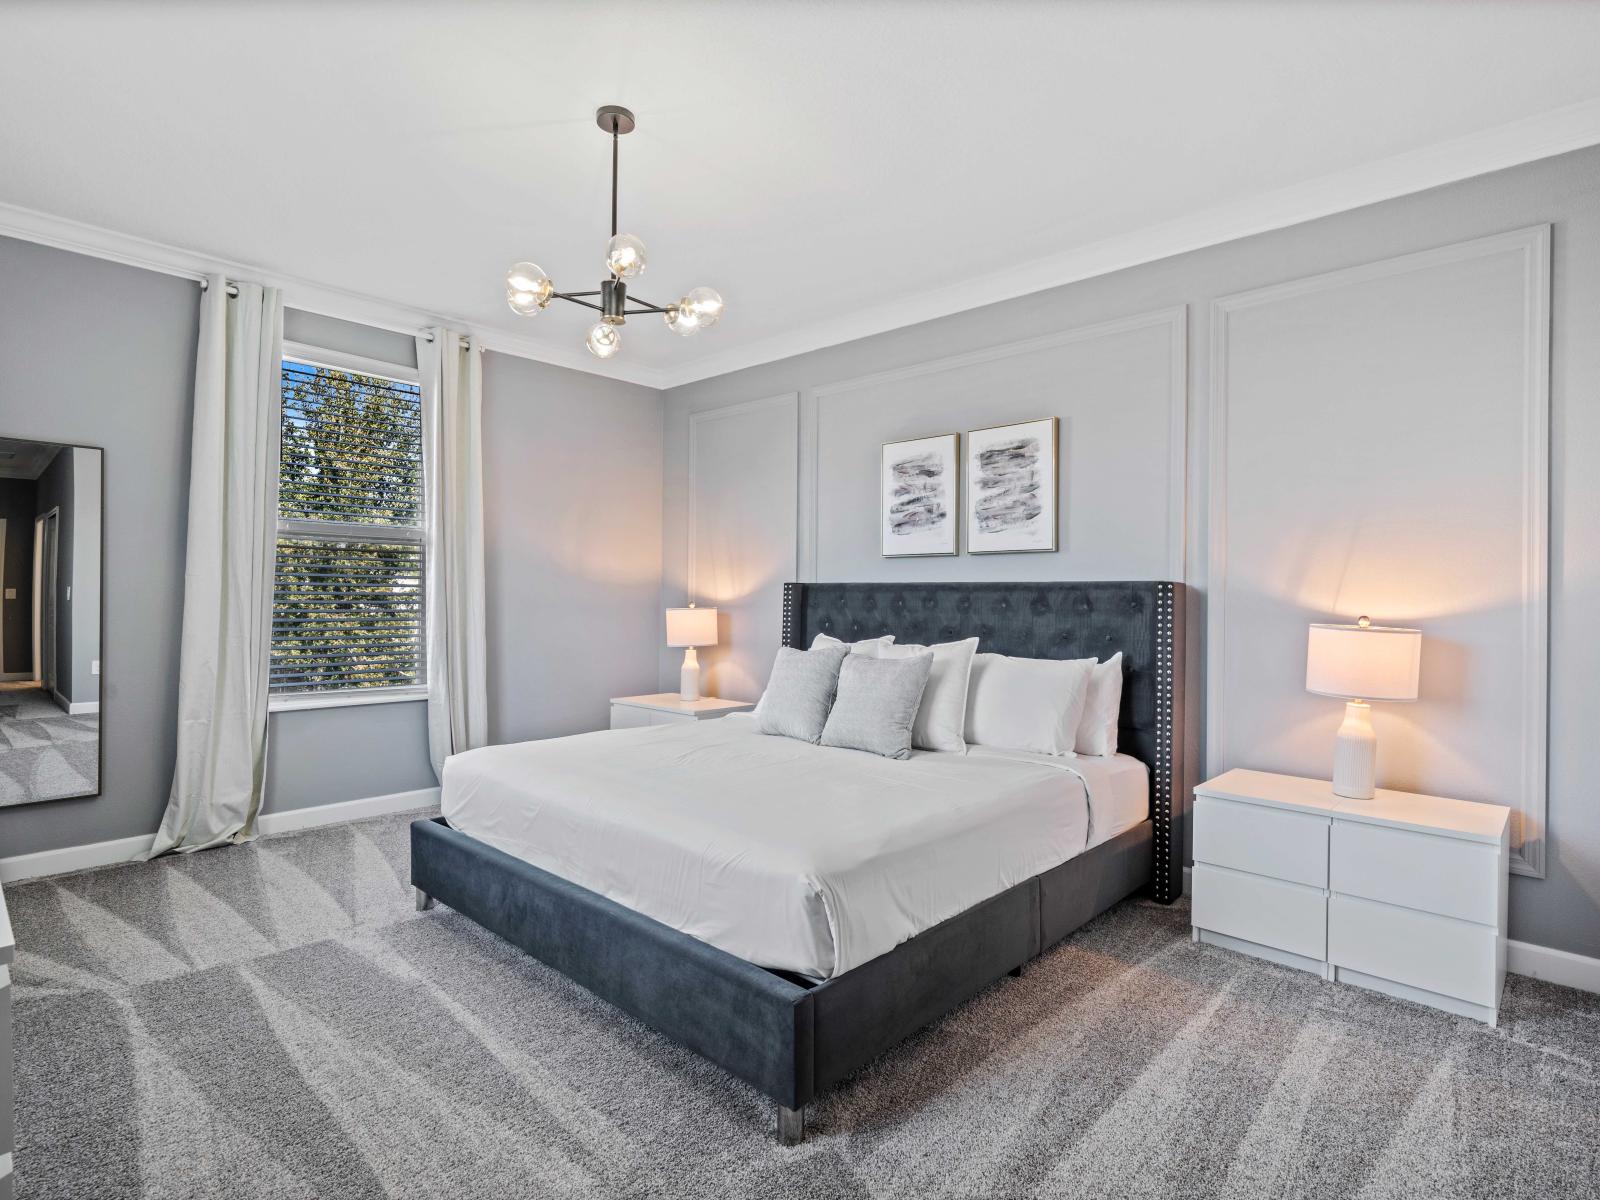 Elegant Bedroom of the Home in Davenport Florida - Full Length mirror - Comfortable plush bed - Elegantly decored room